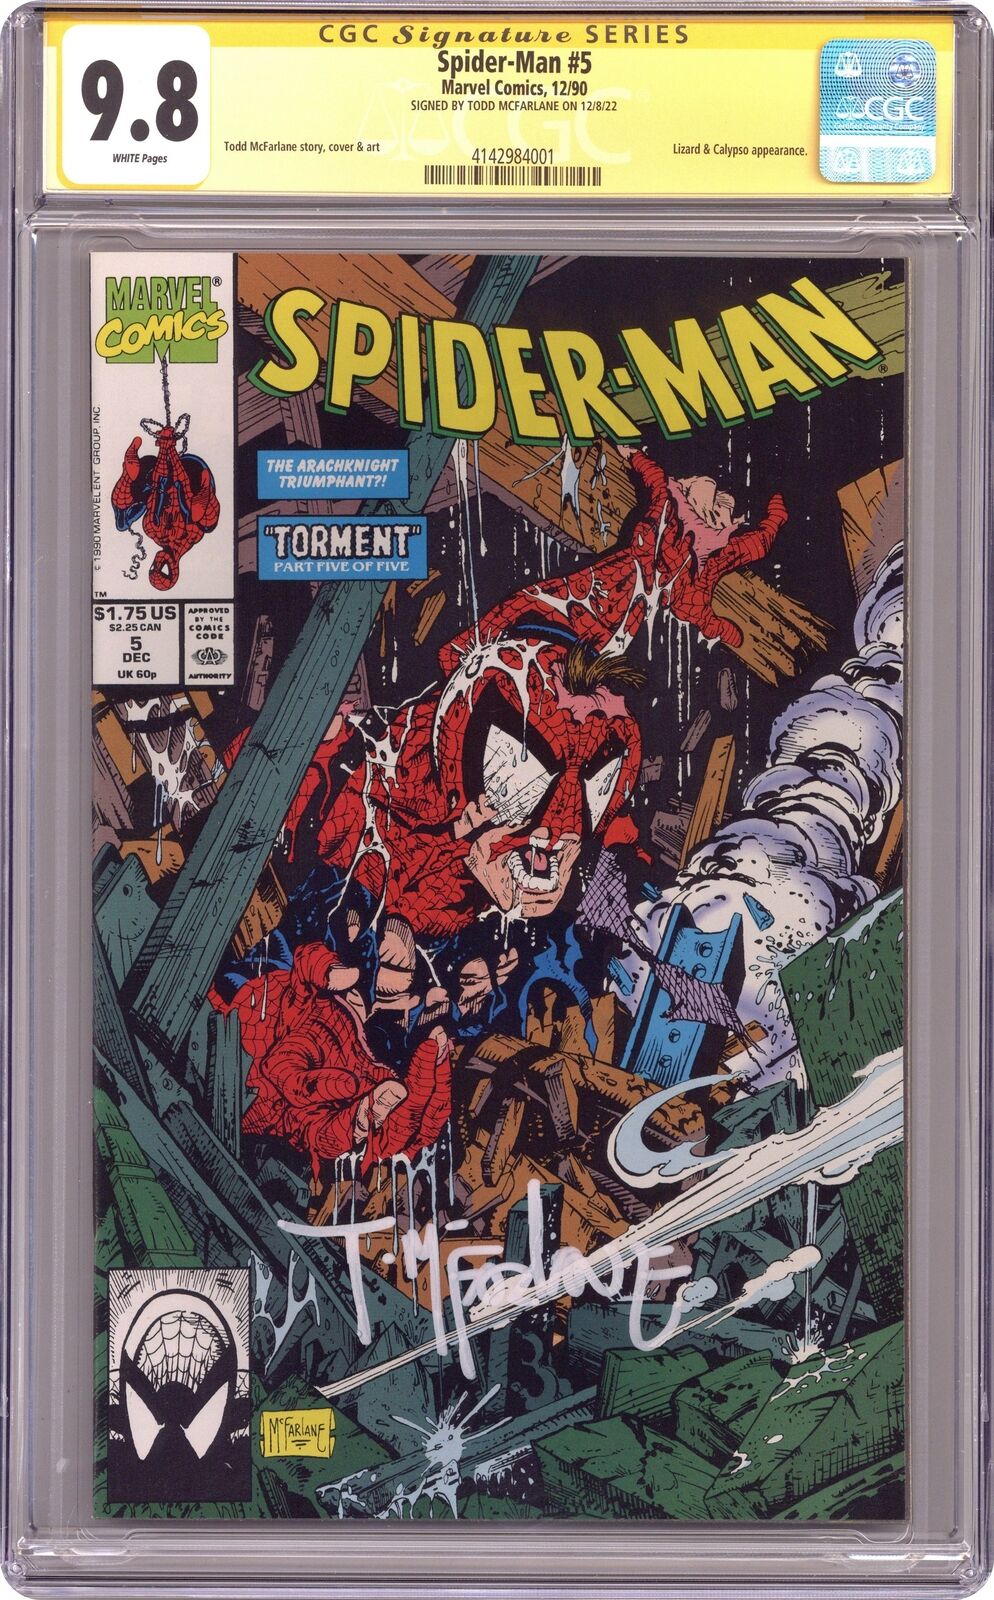 Spider-Man #5D CGC 9.8 SS McFarlane 1990 4142984001